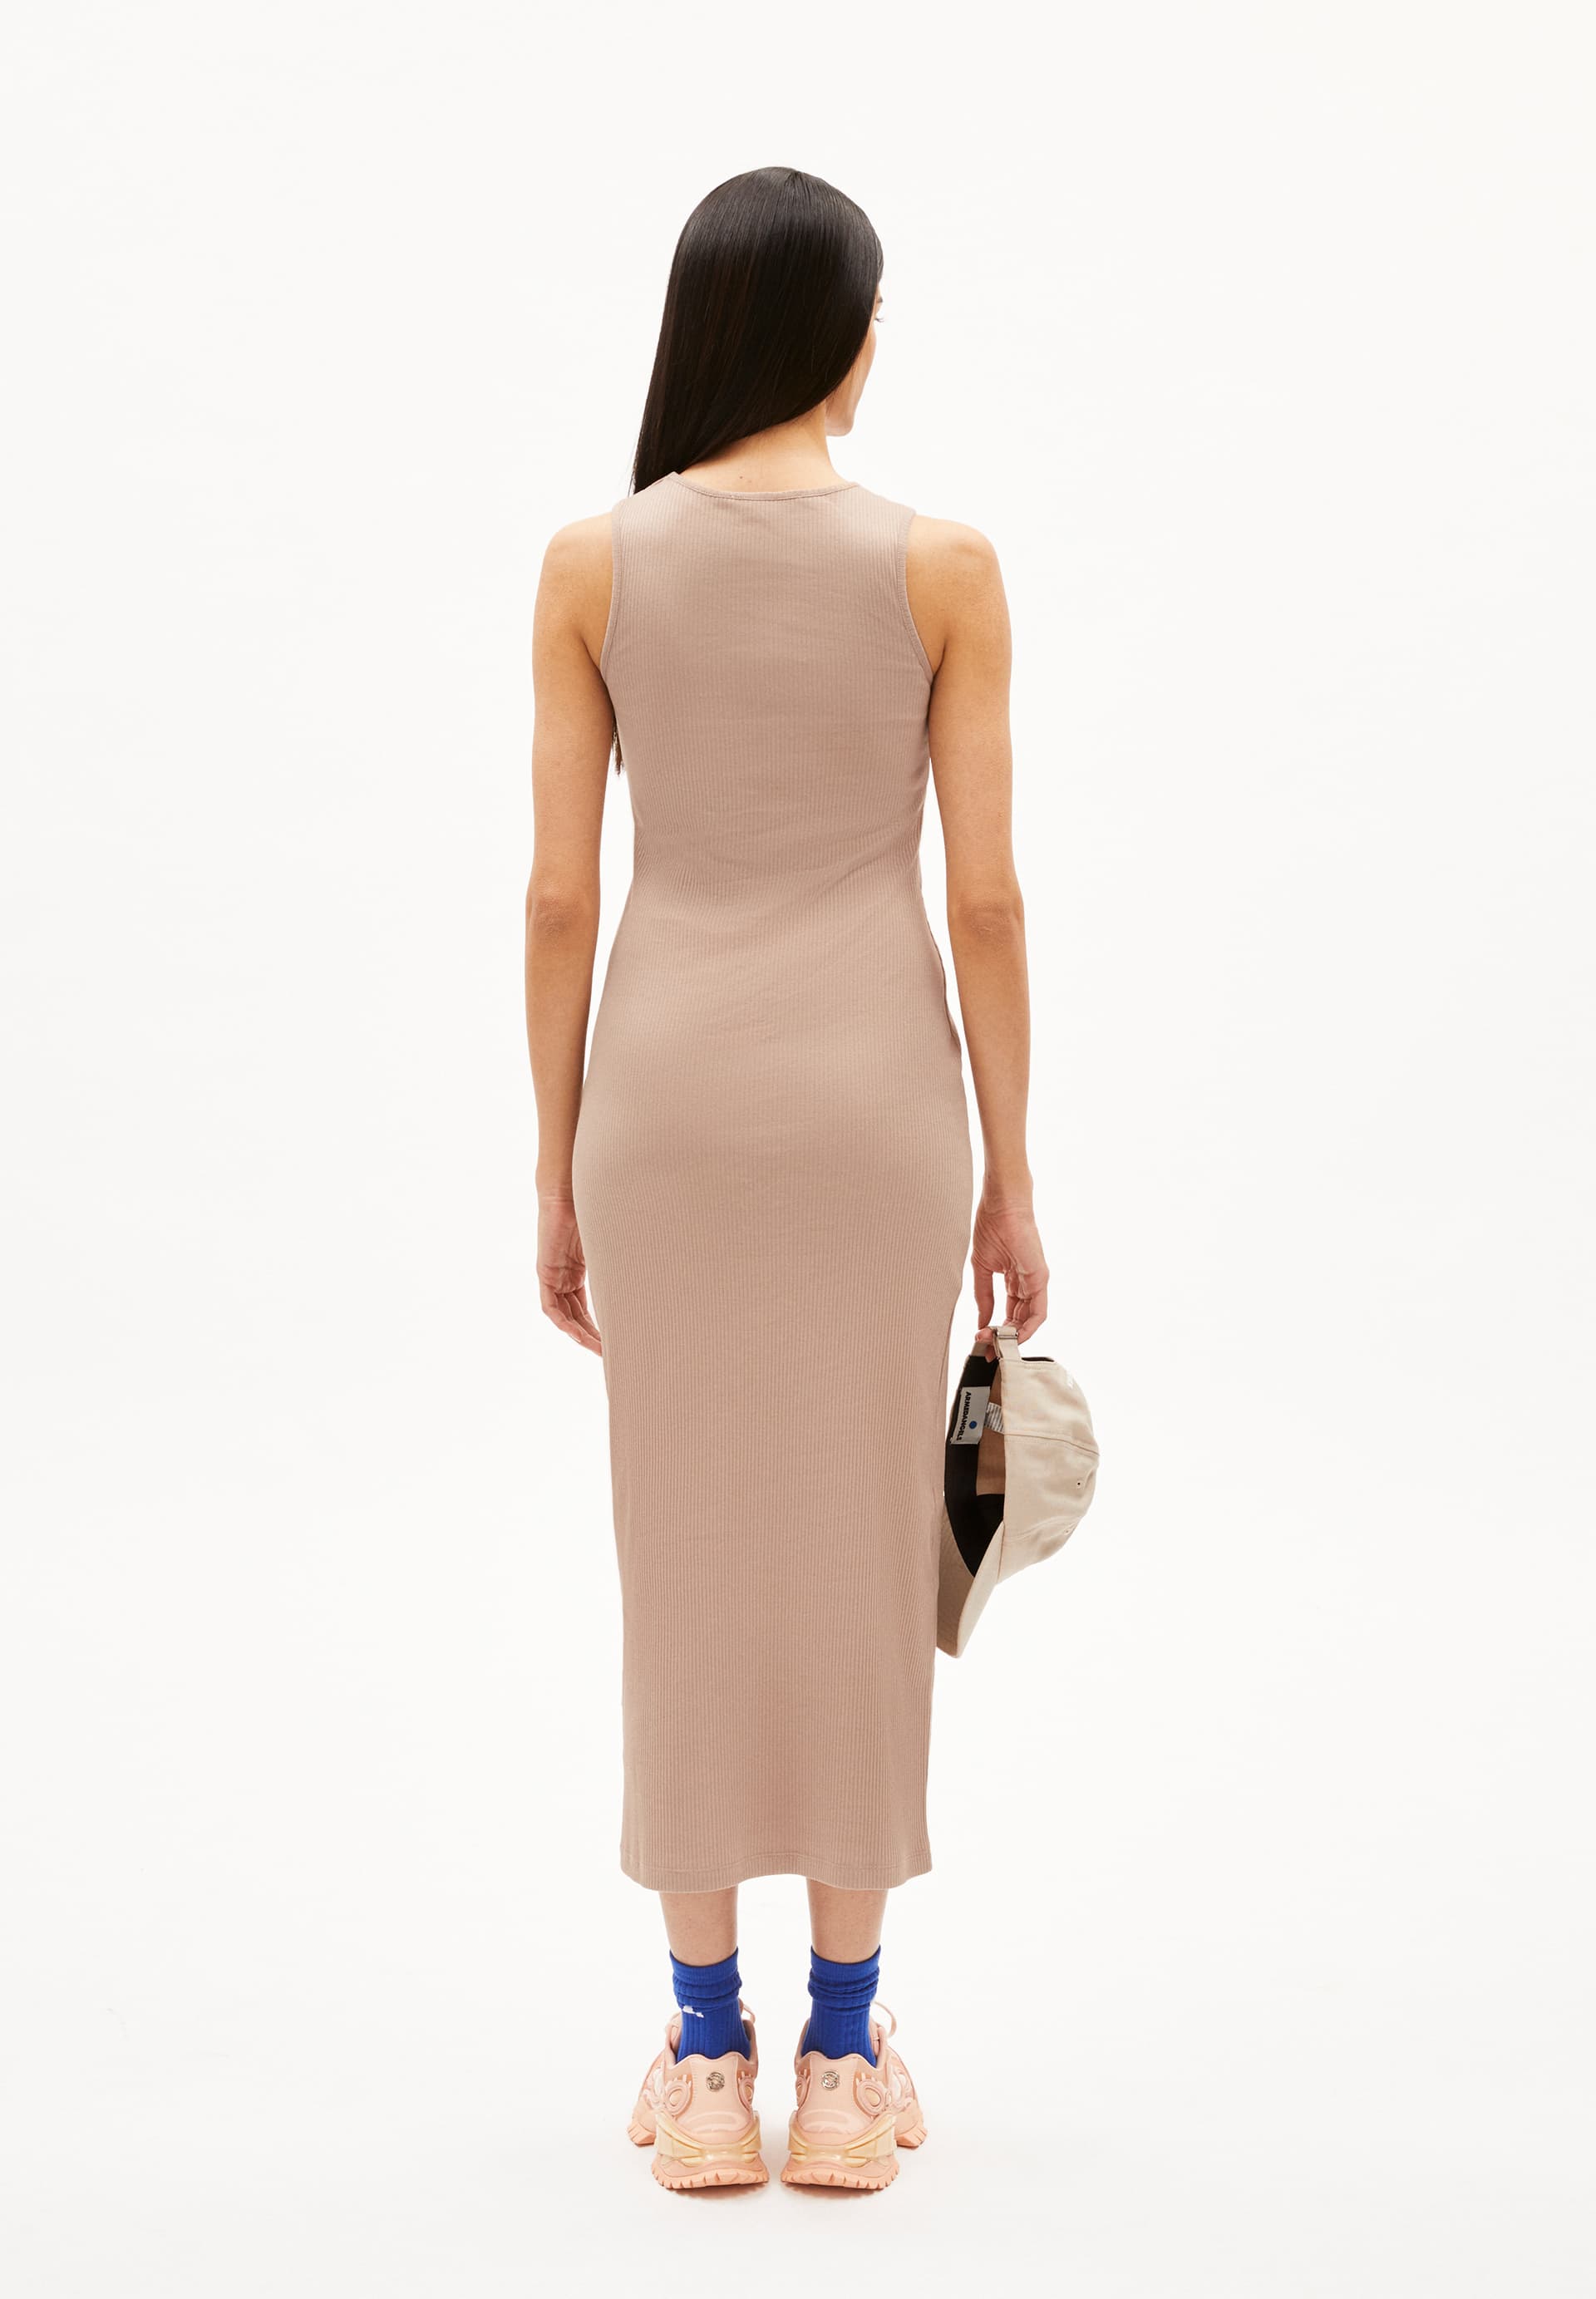 ESILAA Rib-Jersey Dress Slim Fit made of Organic Cotton Mix